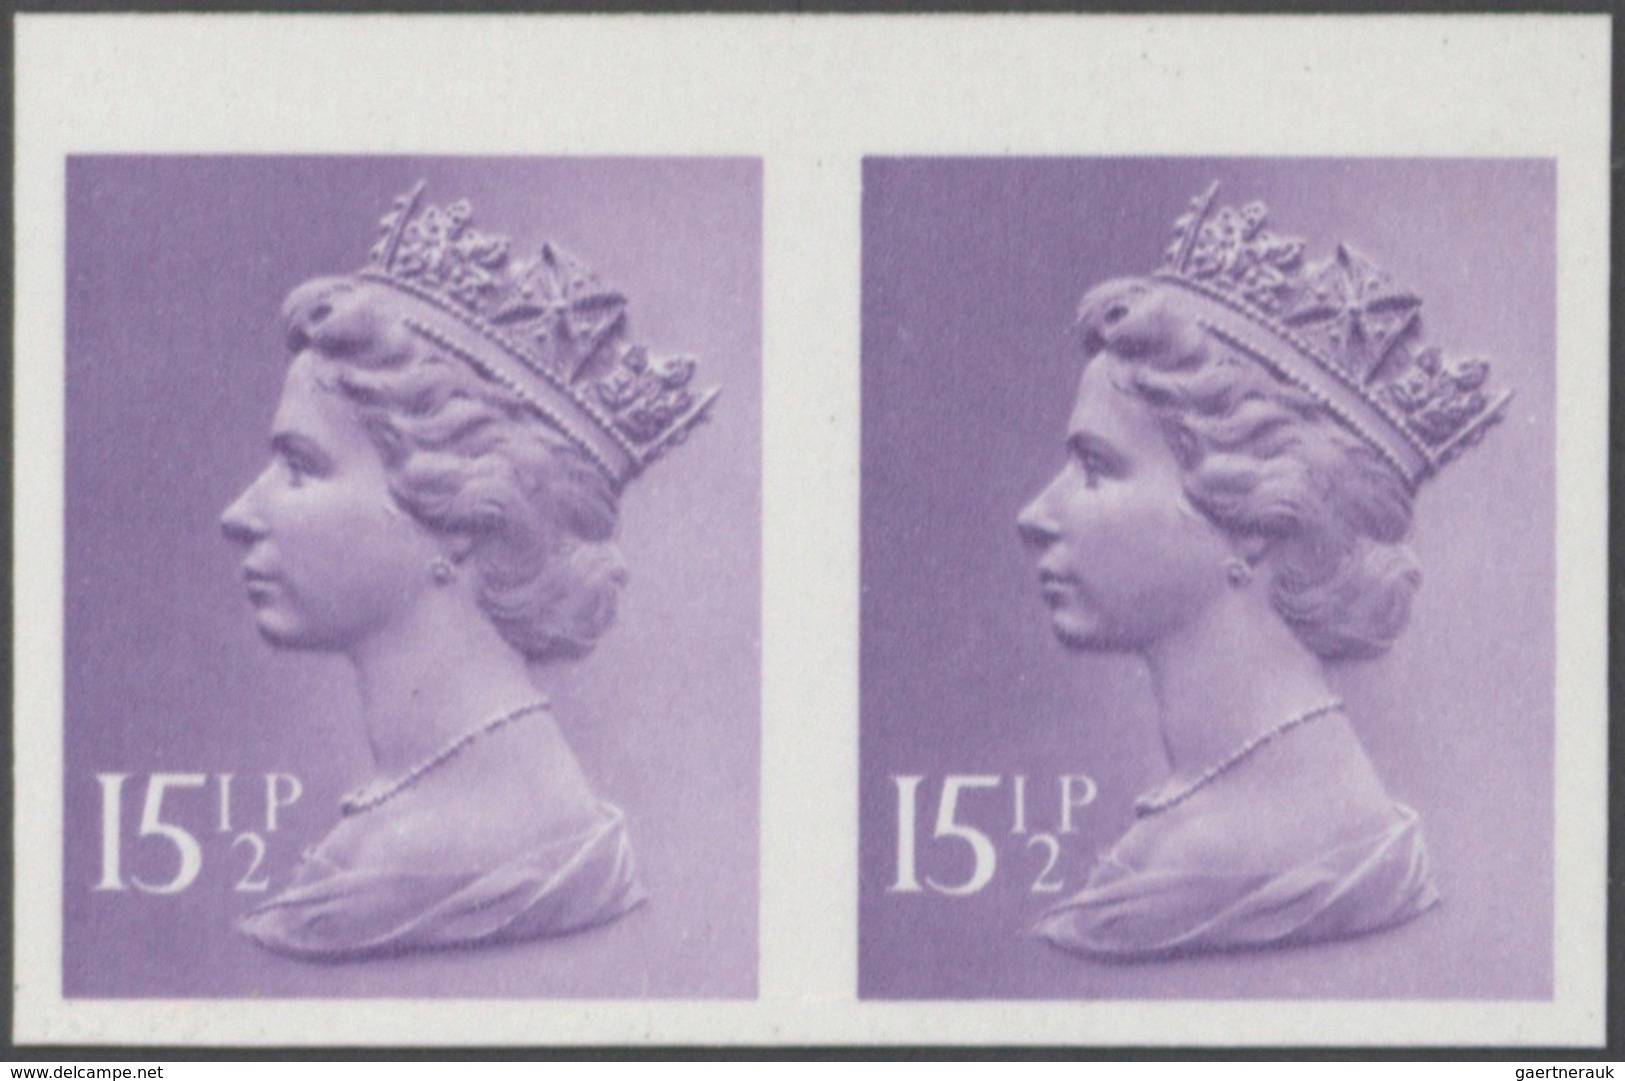 Großbritannien - Machin: 1981, 15 1/2 P. Pale Violet, Imperforated Horizontal Pair, Unmounted Mint. - Série 'Machin'